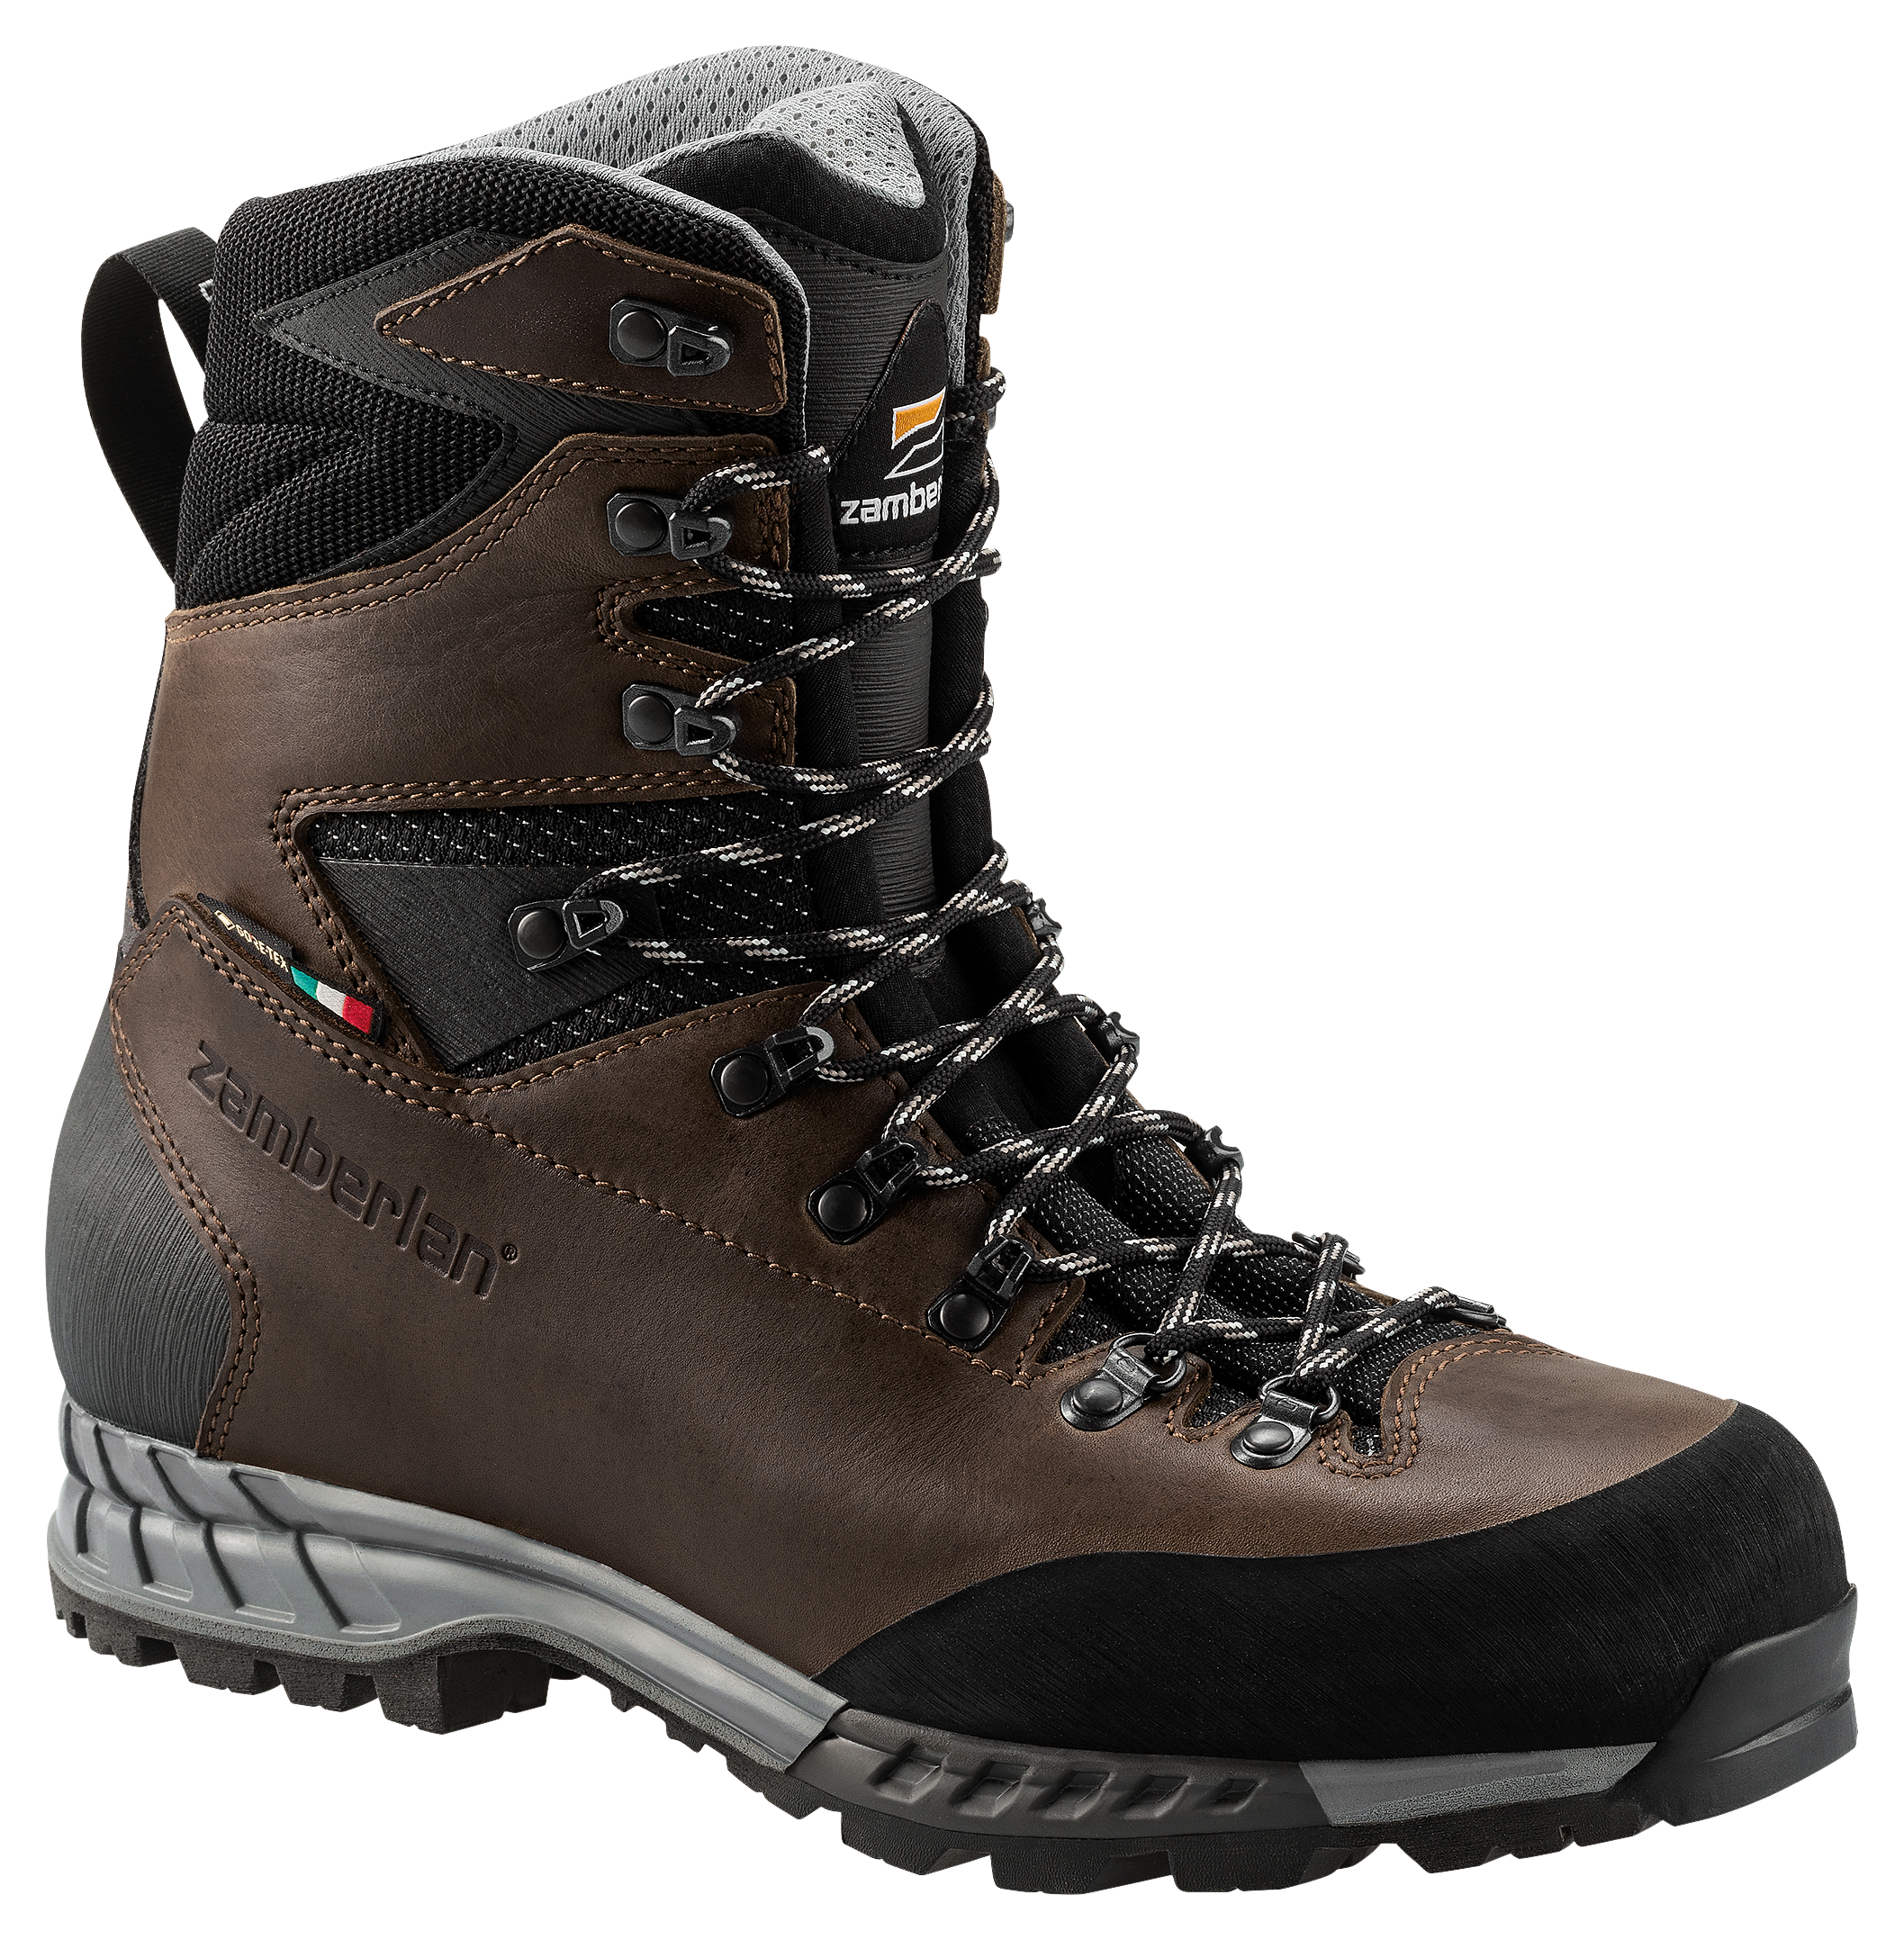 Zamberlan Cresta Alta GTX RR Hunting Boots for Men